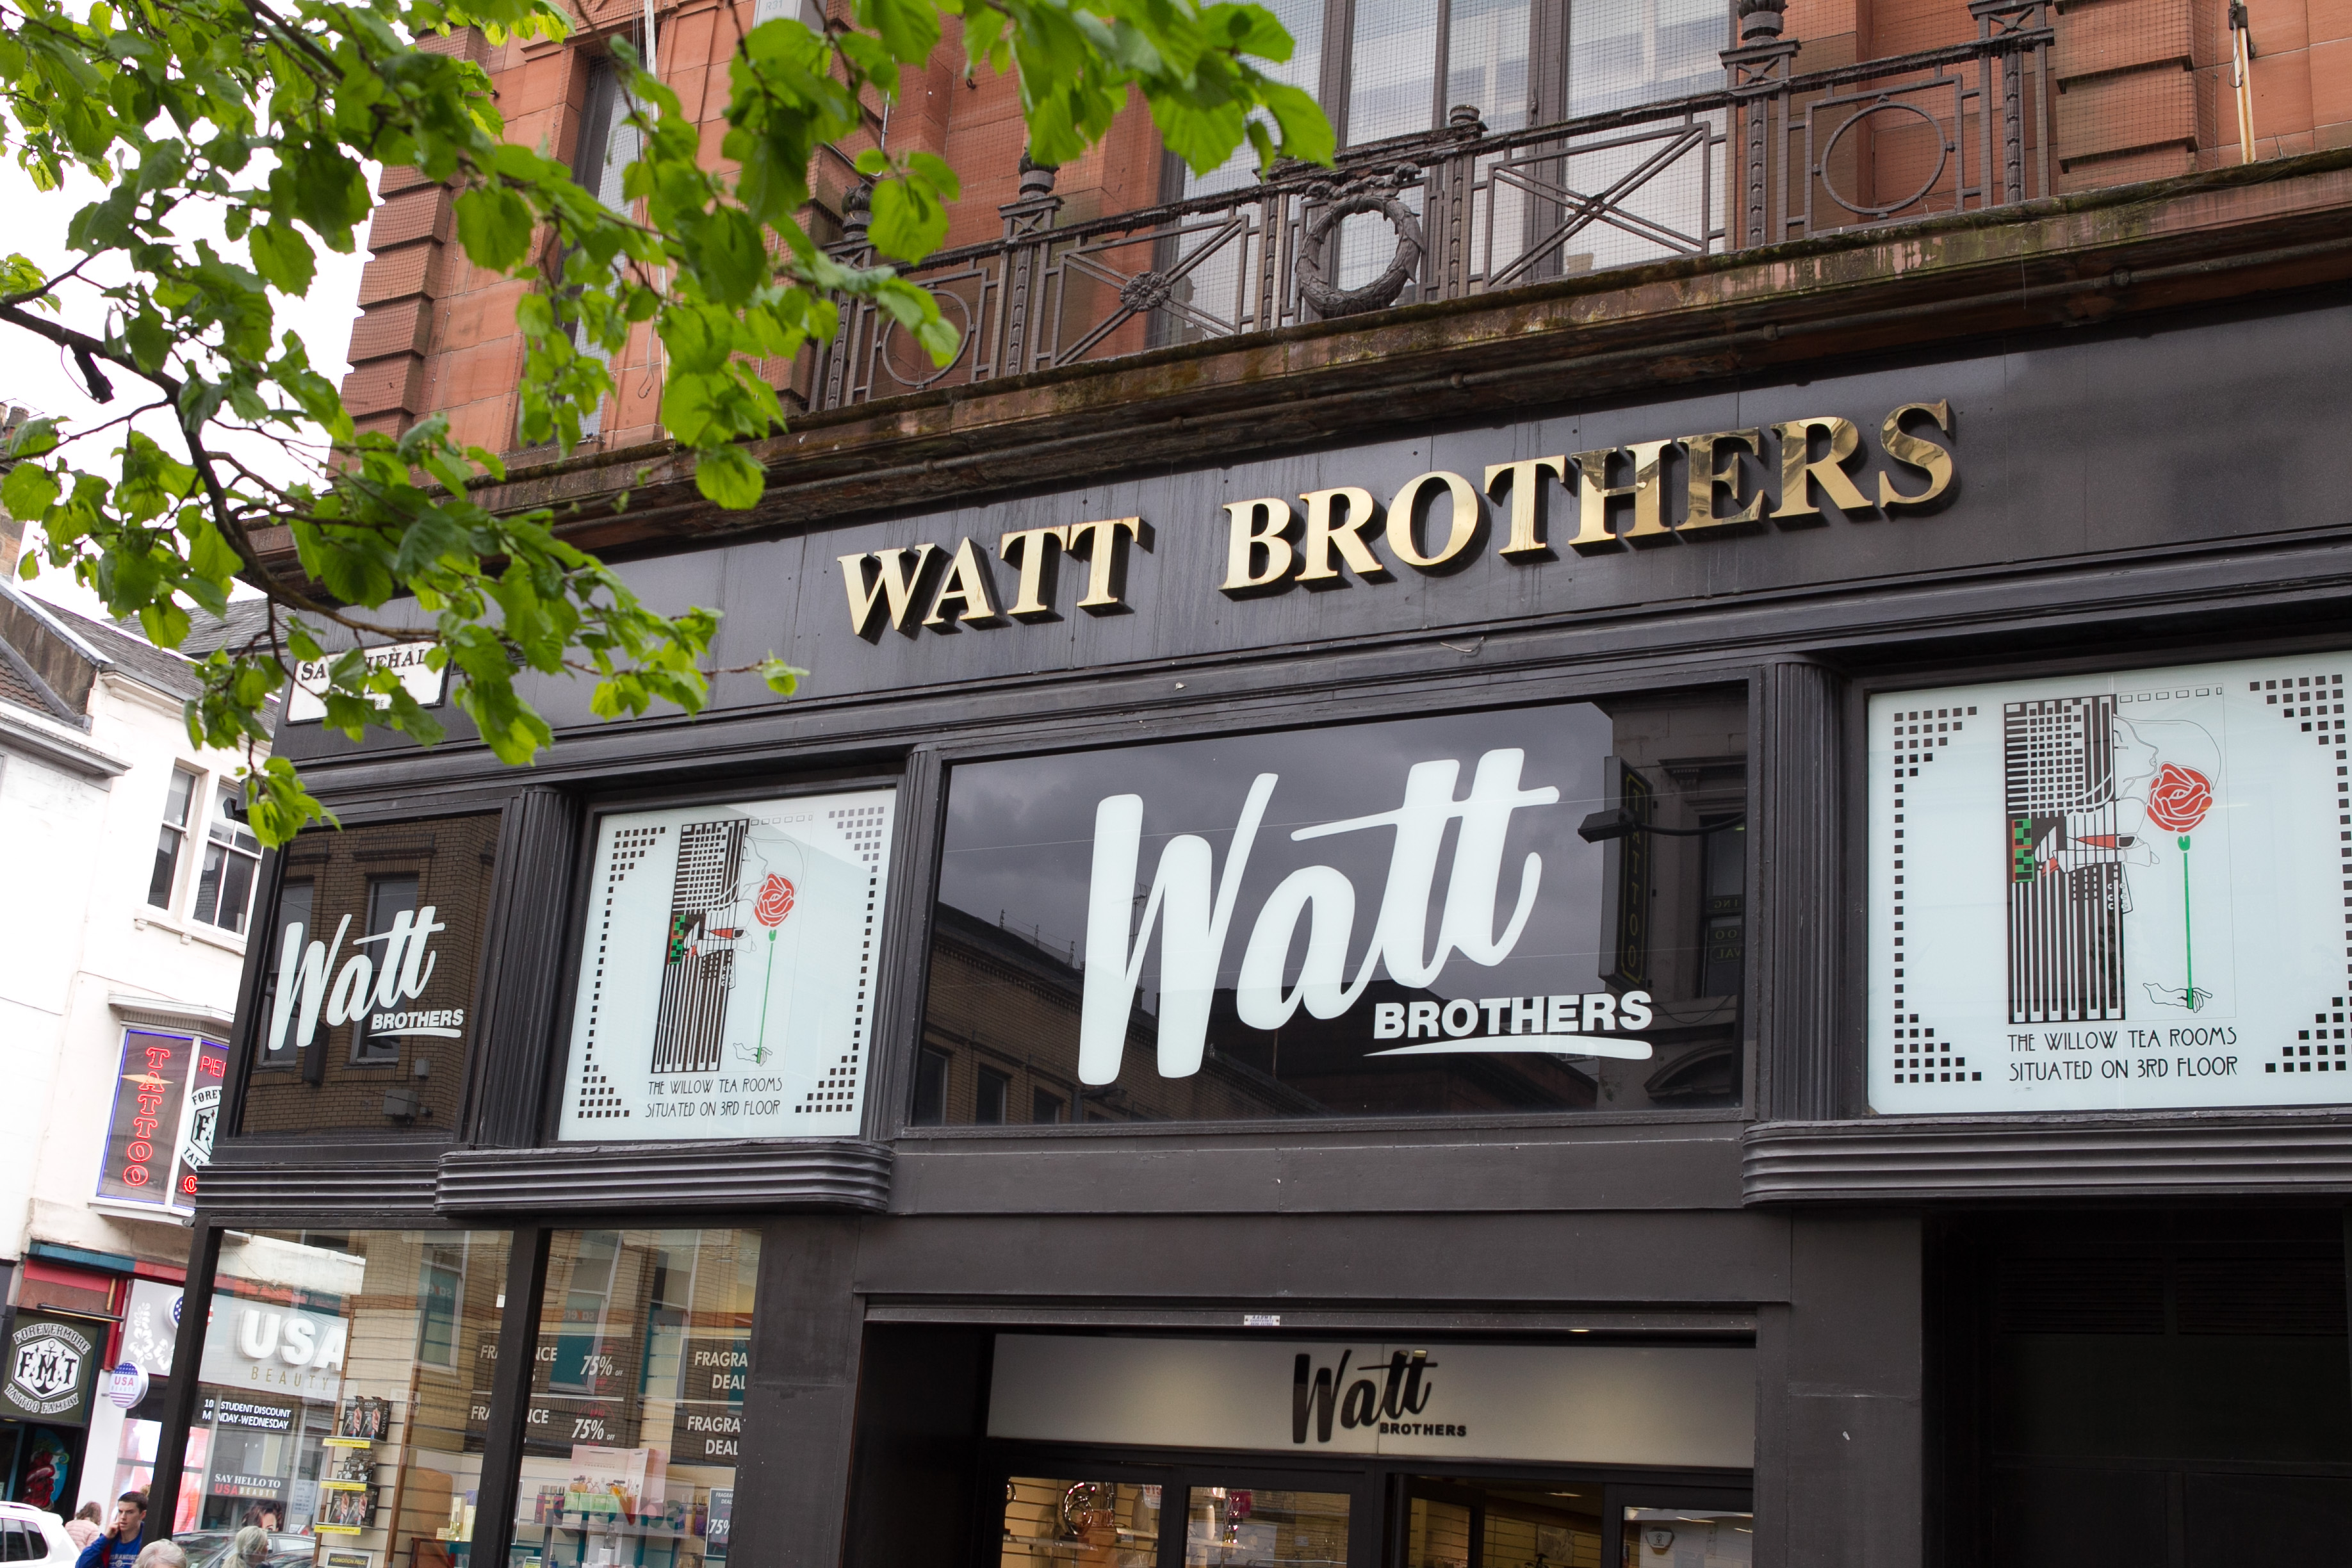 Watt Brothers department store in Glasgow